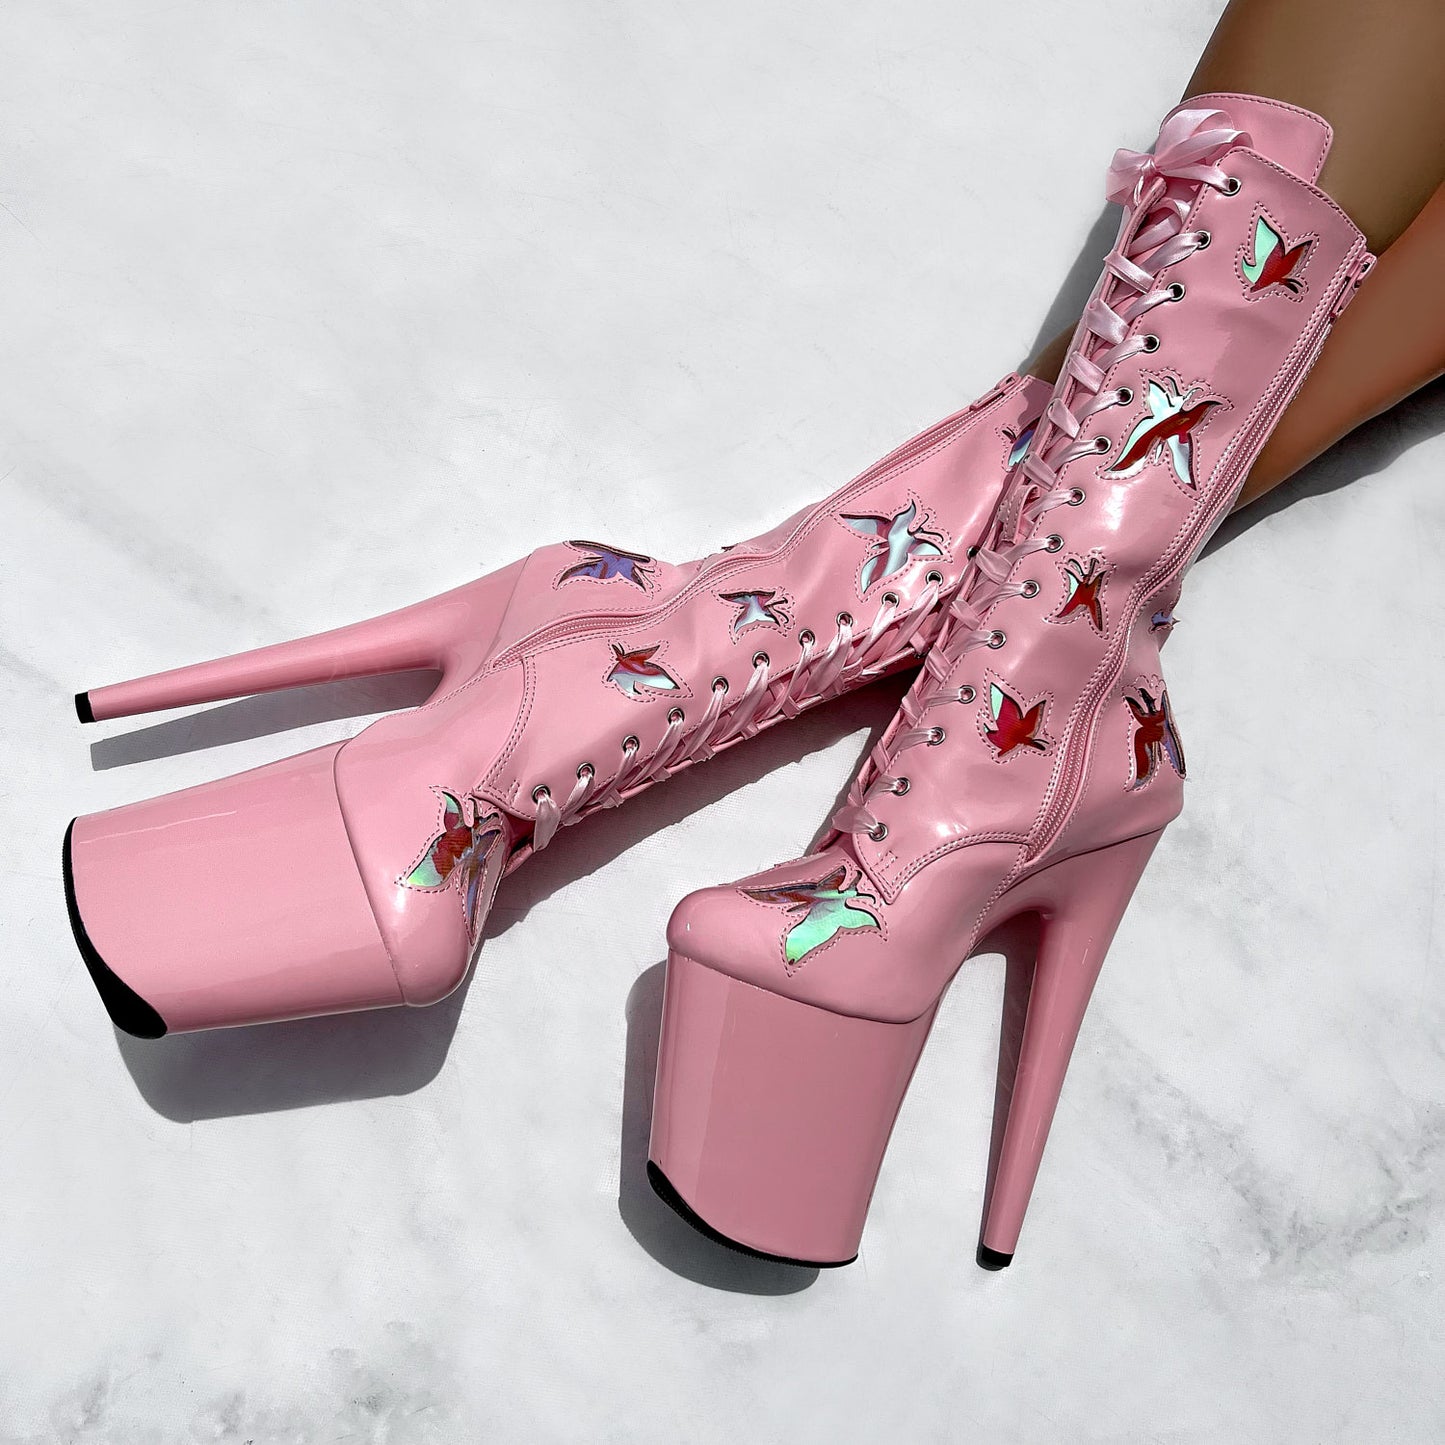 high heel boots pink